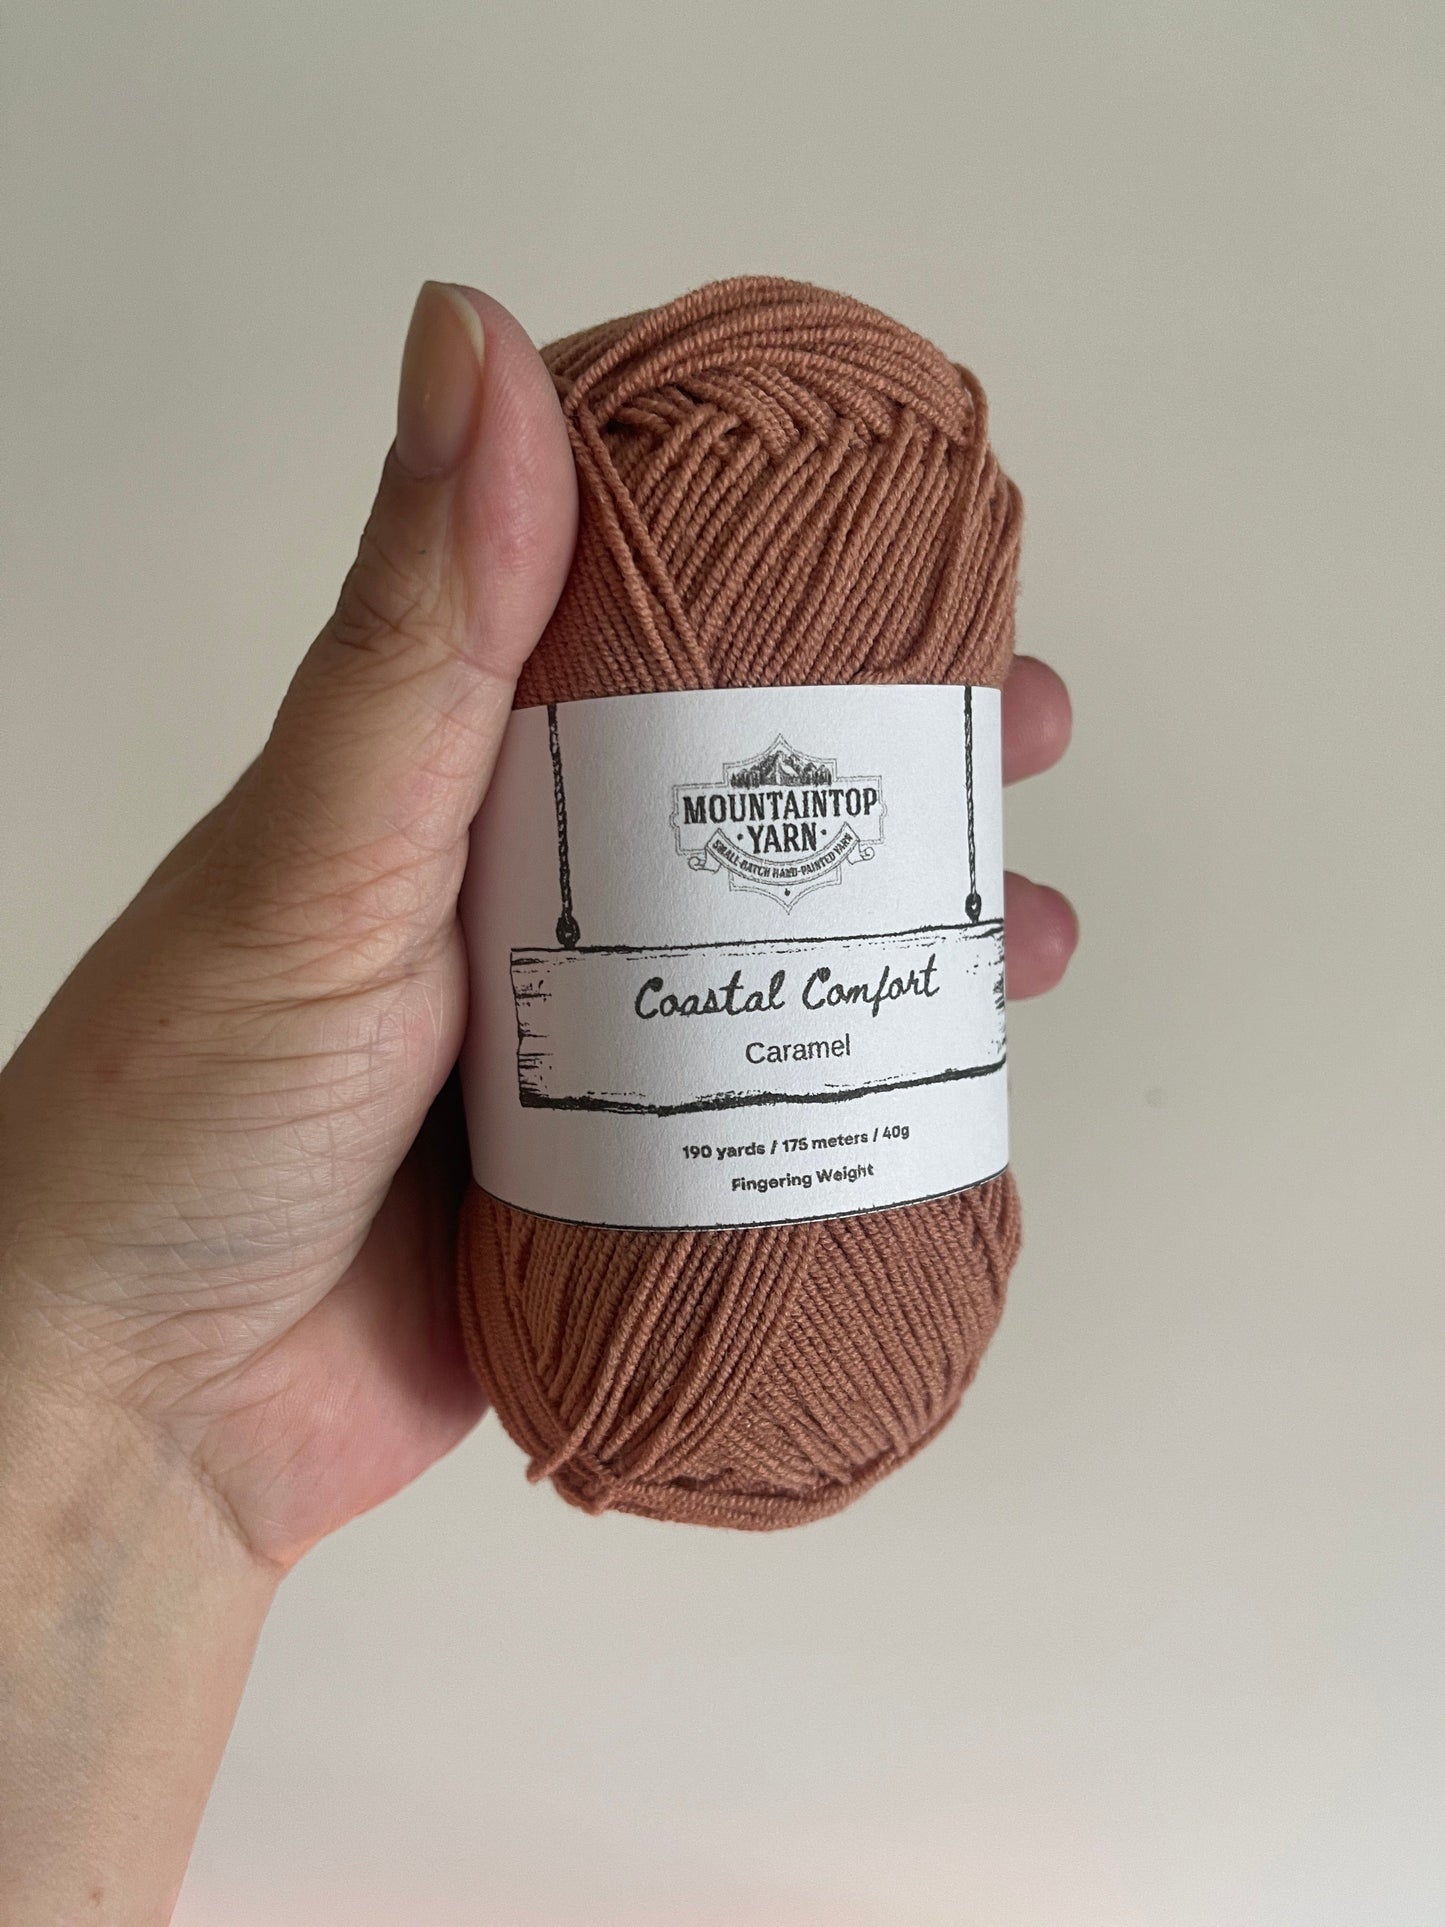 Mountaintop Yarn Caramel Coastal Comfort - Cotton and Acrylic Blend Yarn Yarn